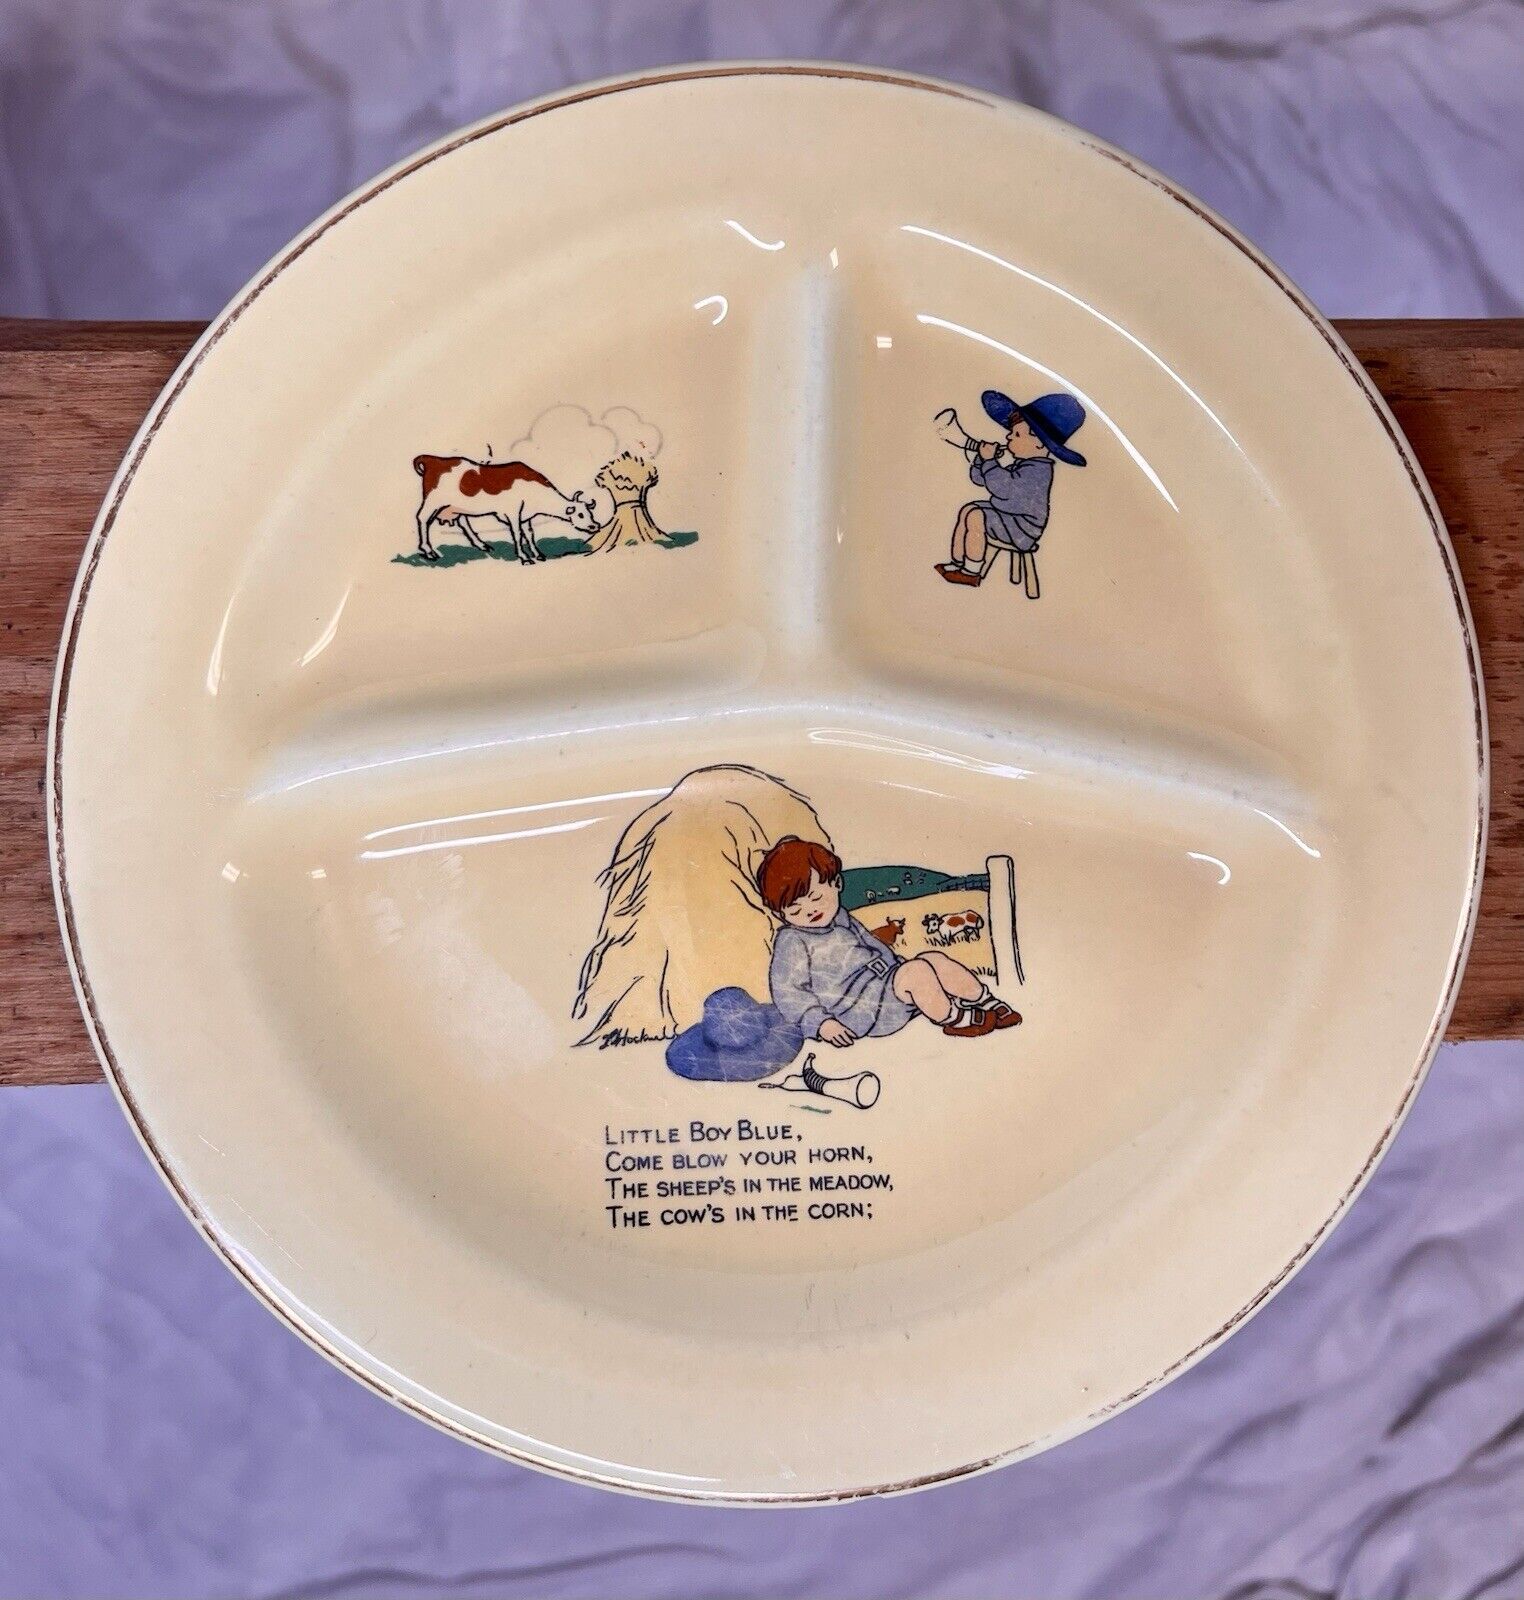 Vintage Ceramic Baby Plate Little Boy Blue Nursery Rhyme. Gold Trim